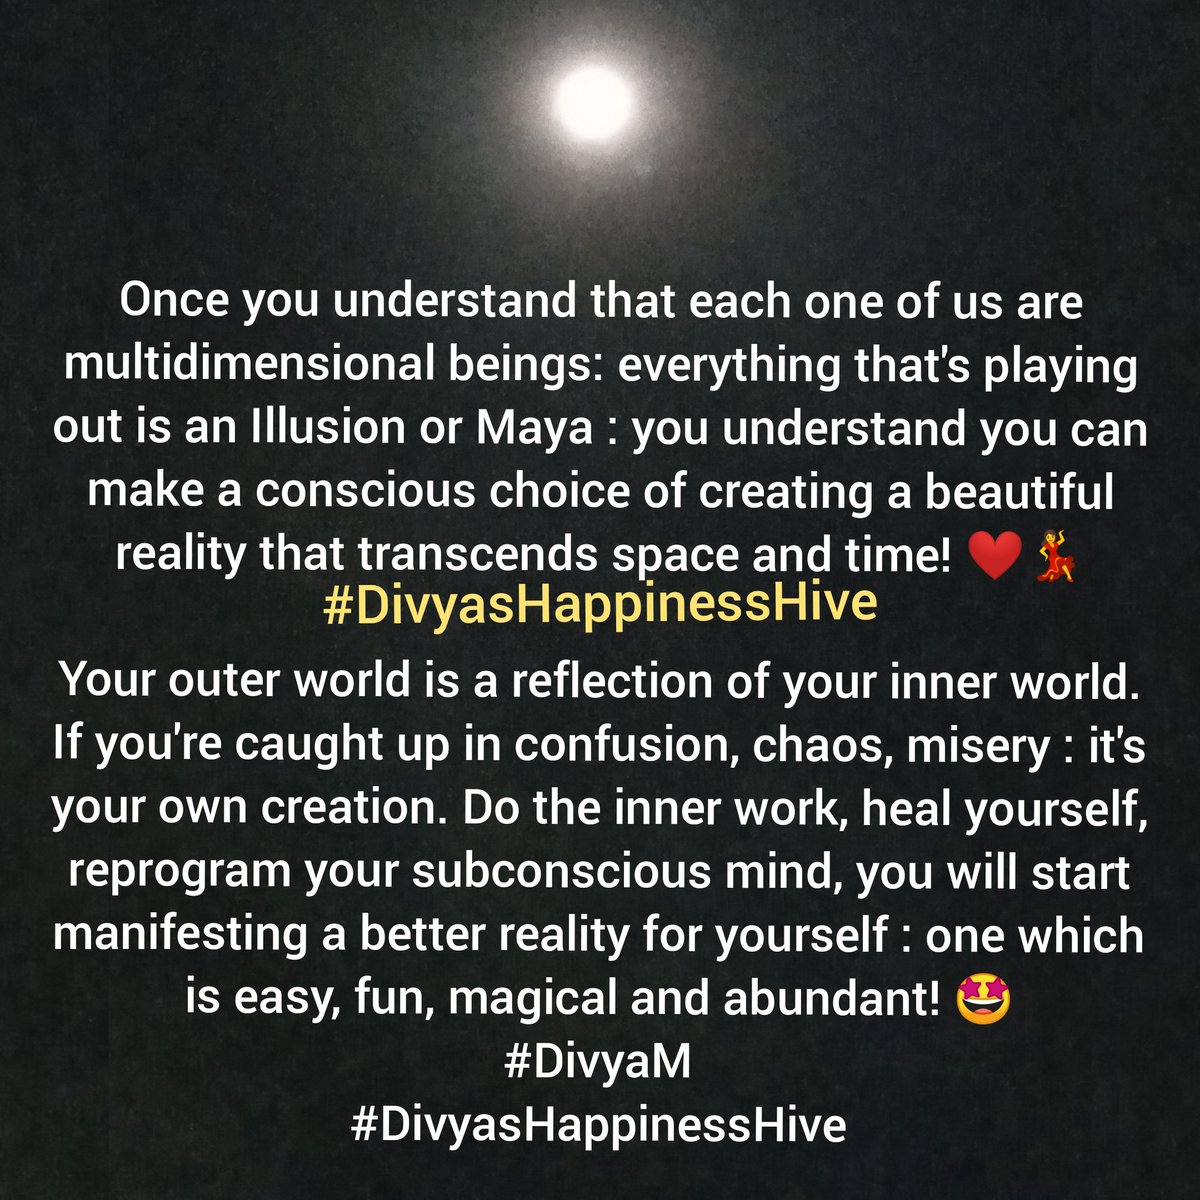 #multidimensional
#multiverse
#illusion #maya #reality #transcend
#innerwork #healing #reprogram #subconsciousmind #manifesting #manifestation
#magic #abundance

#DivyaM
#divyashappinesshive
#Psychologist
#MindCoach 
#Graphologist 
#spiritualguide
#quantumintuitive
#healer